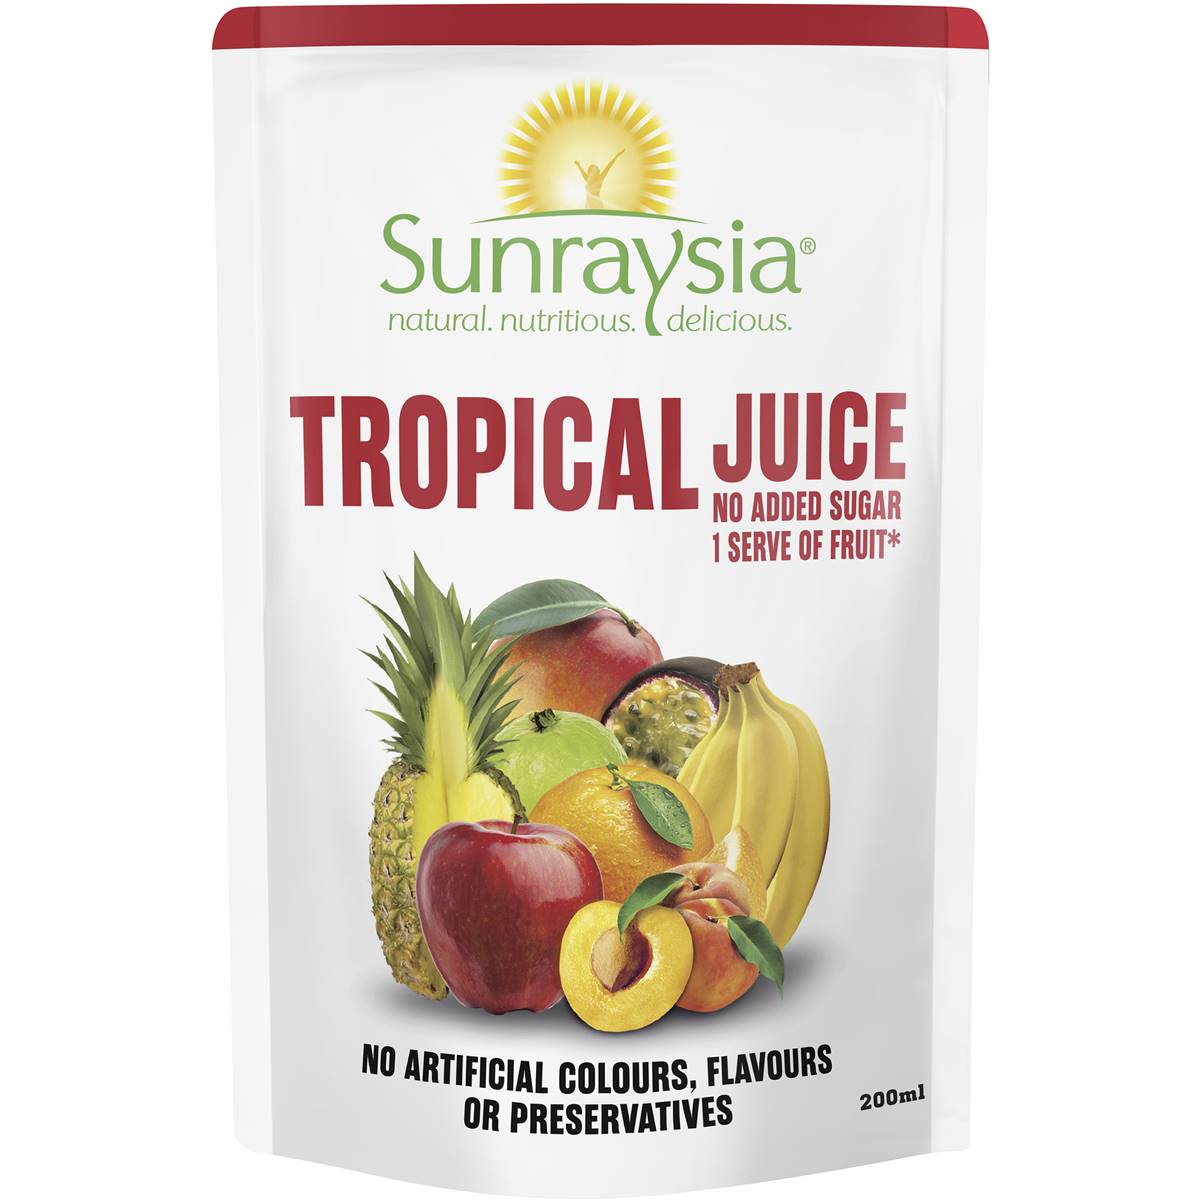 Calories in Sunraysia Tropical Juice